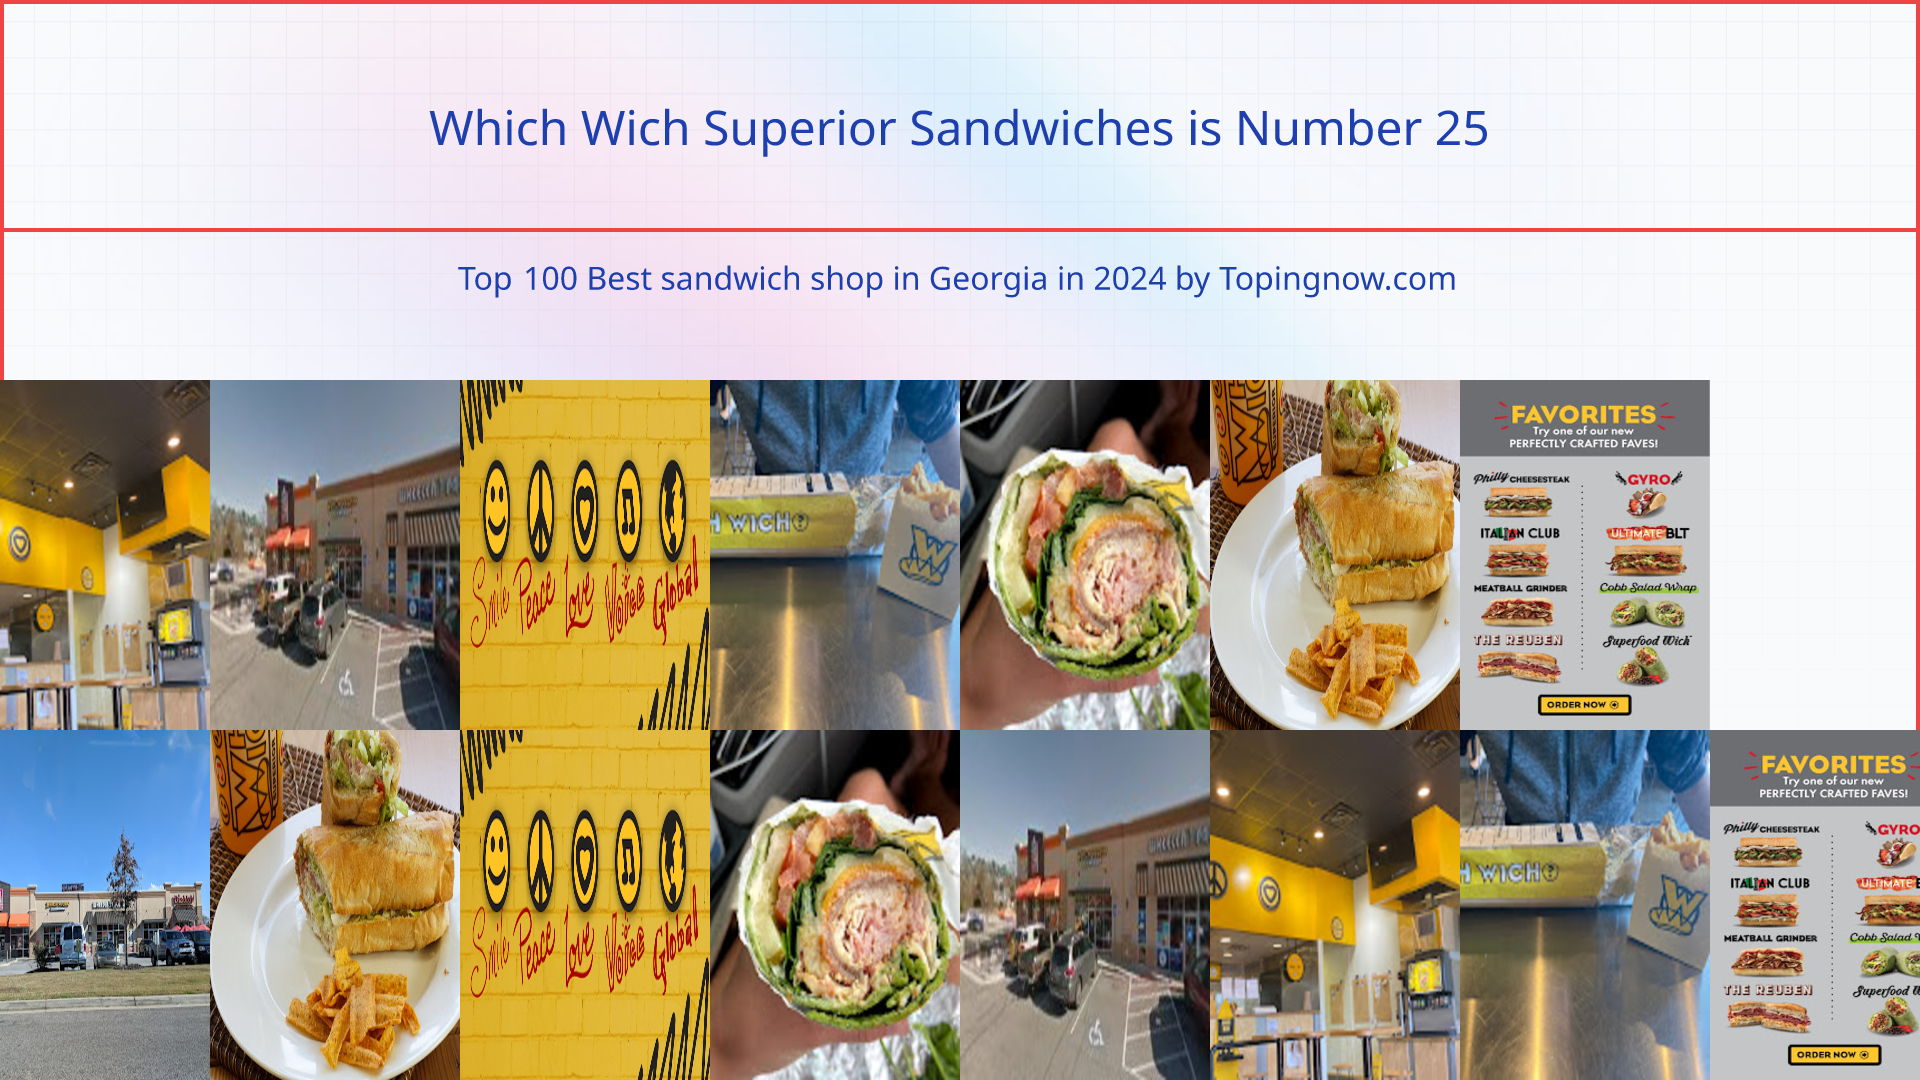 Which Wich Superior Sandwiches: Top 100 Best sandwich shop in Georgia in 2024